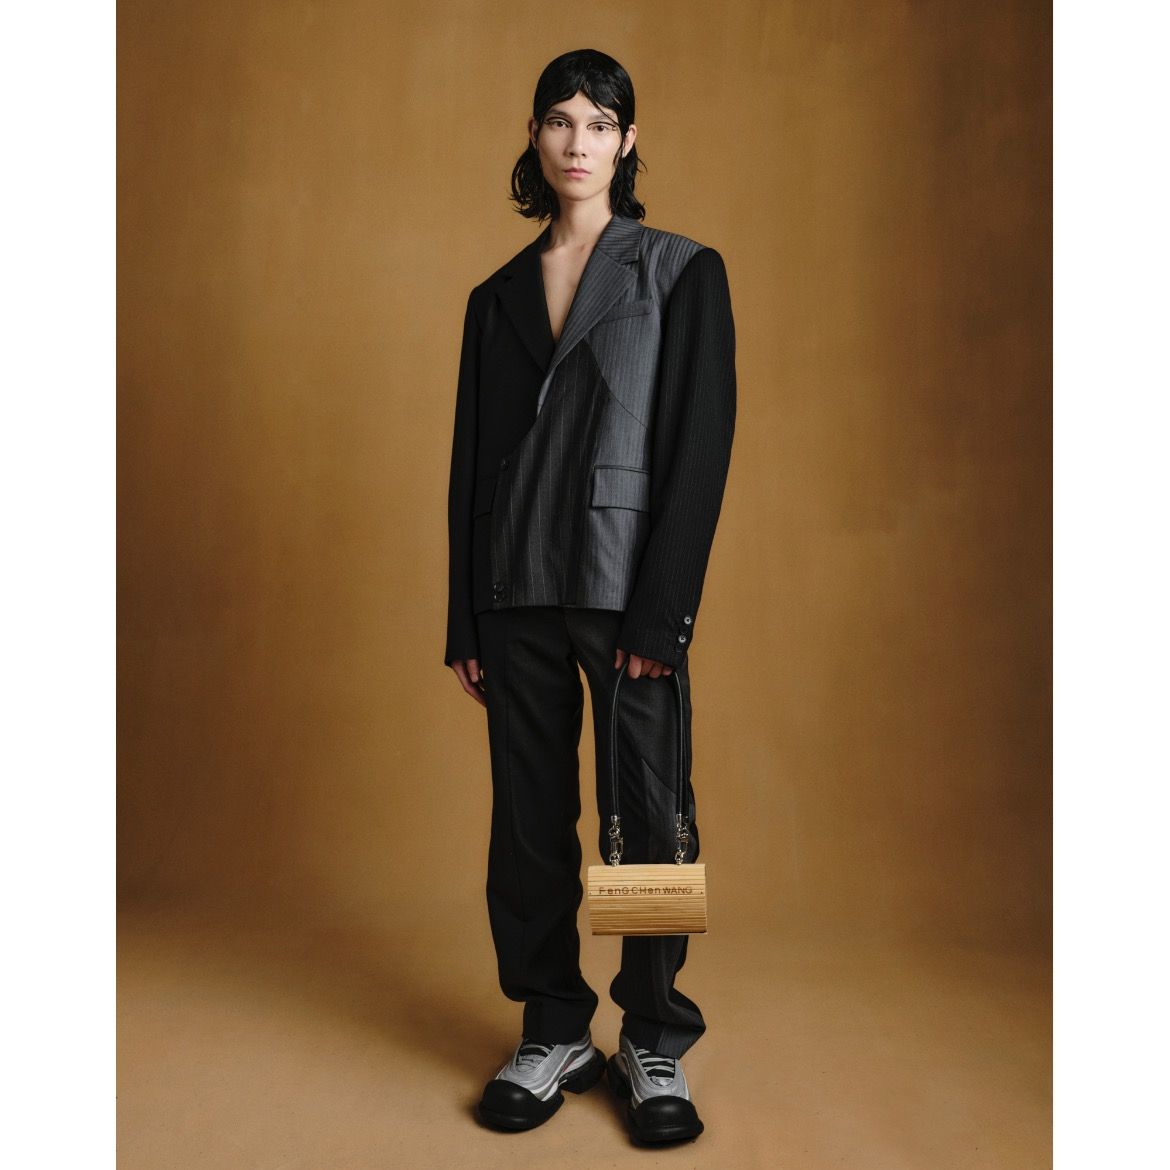 Feng Chen Wang - 【残り一点】Paneled Wool Trousers | ACRMTSM